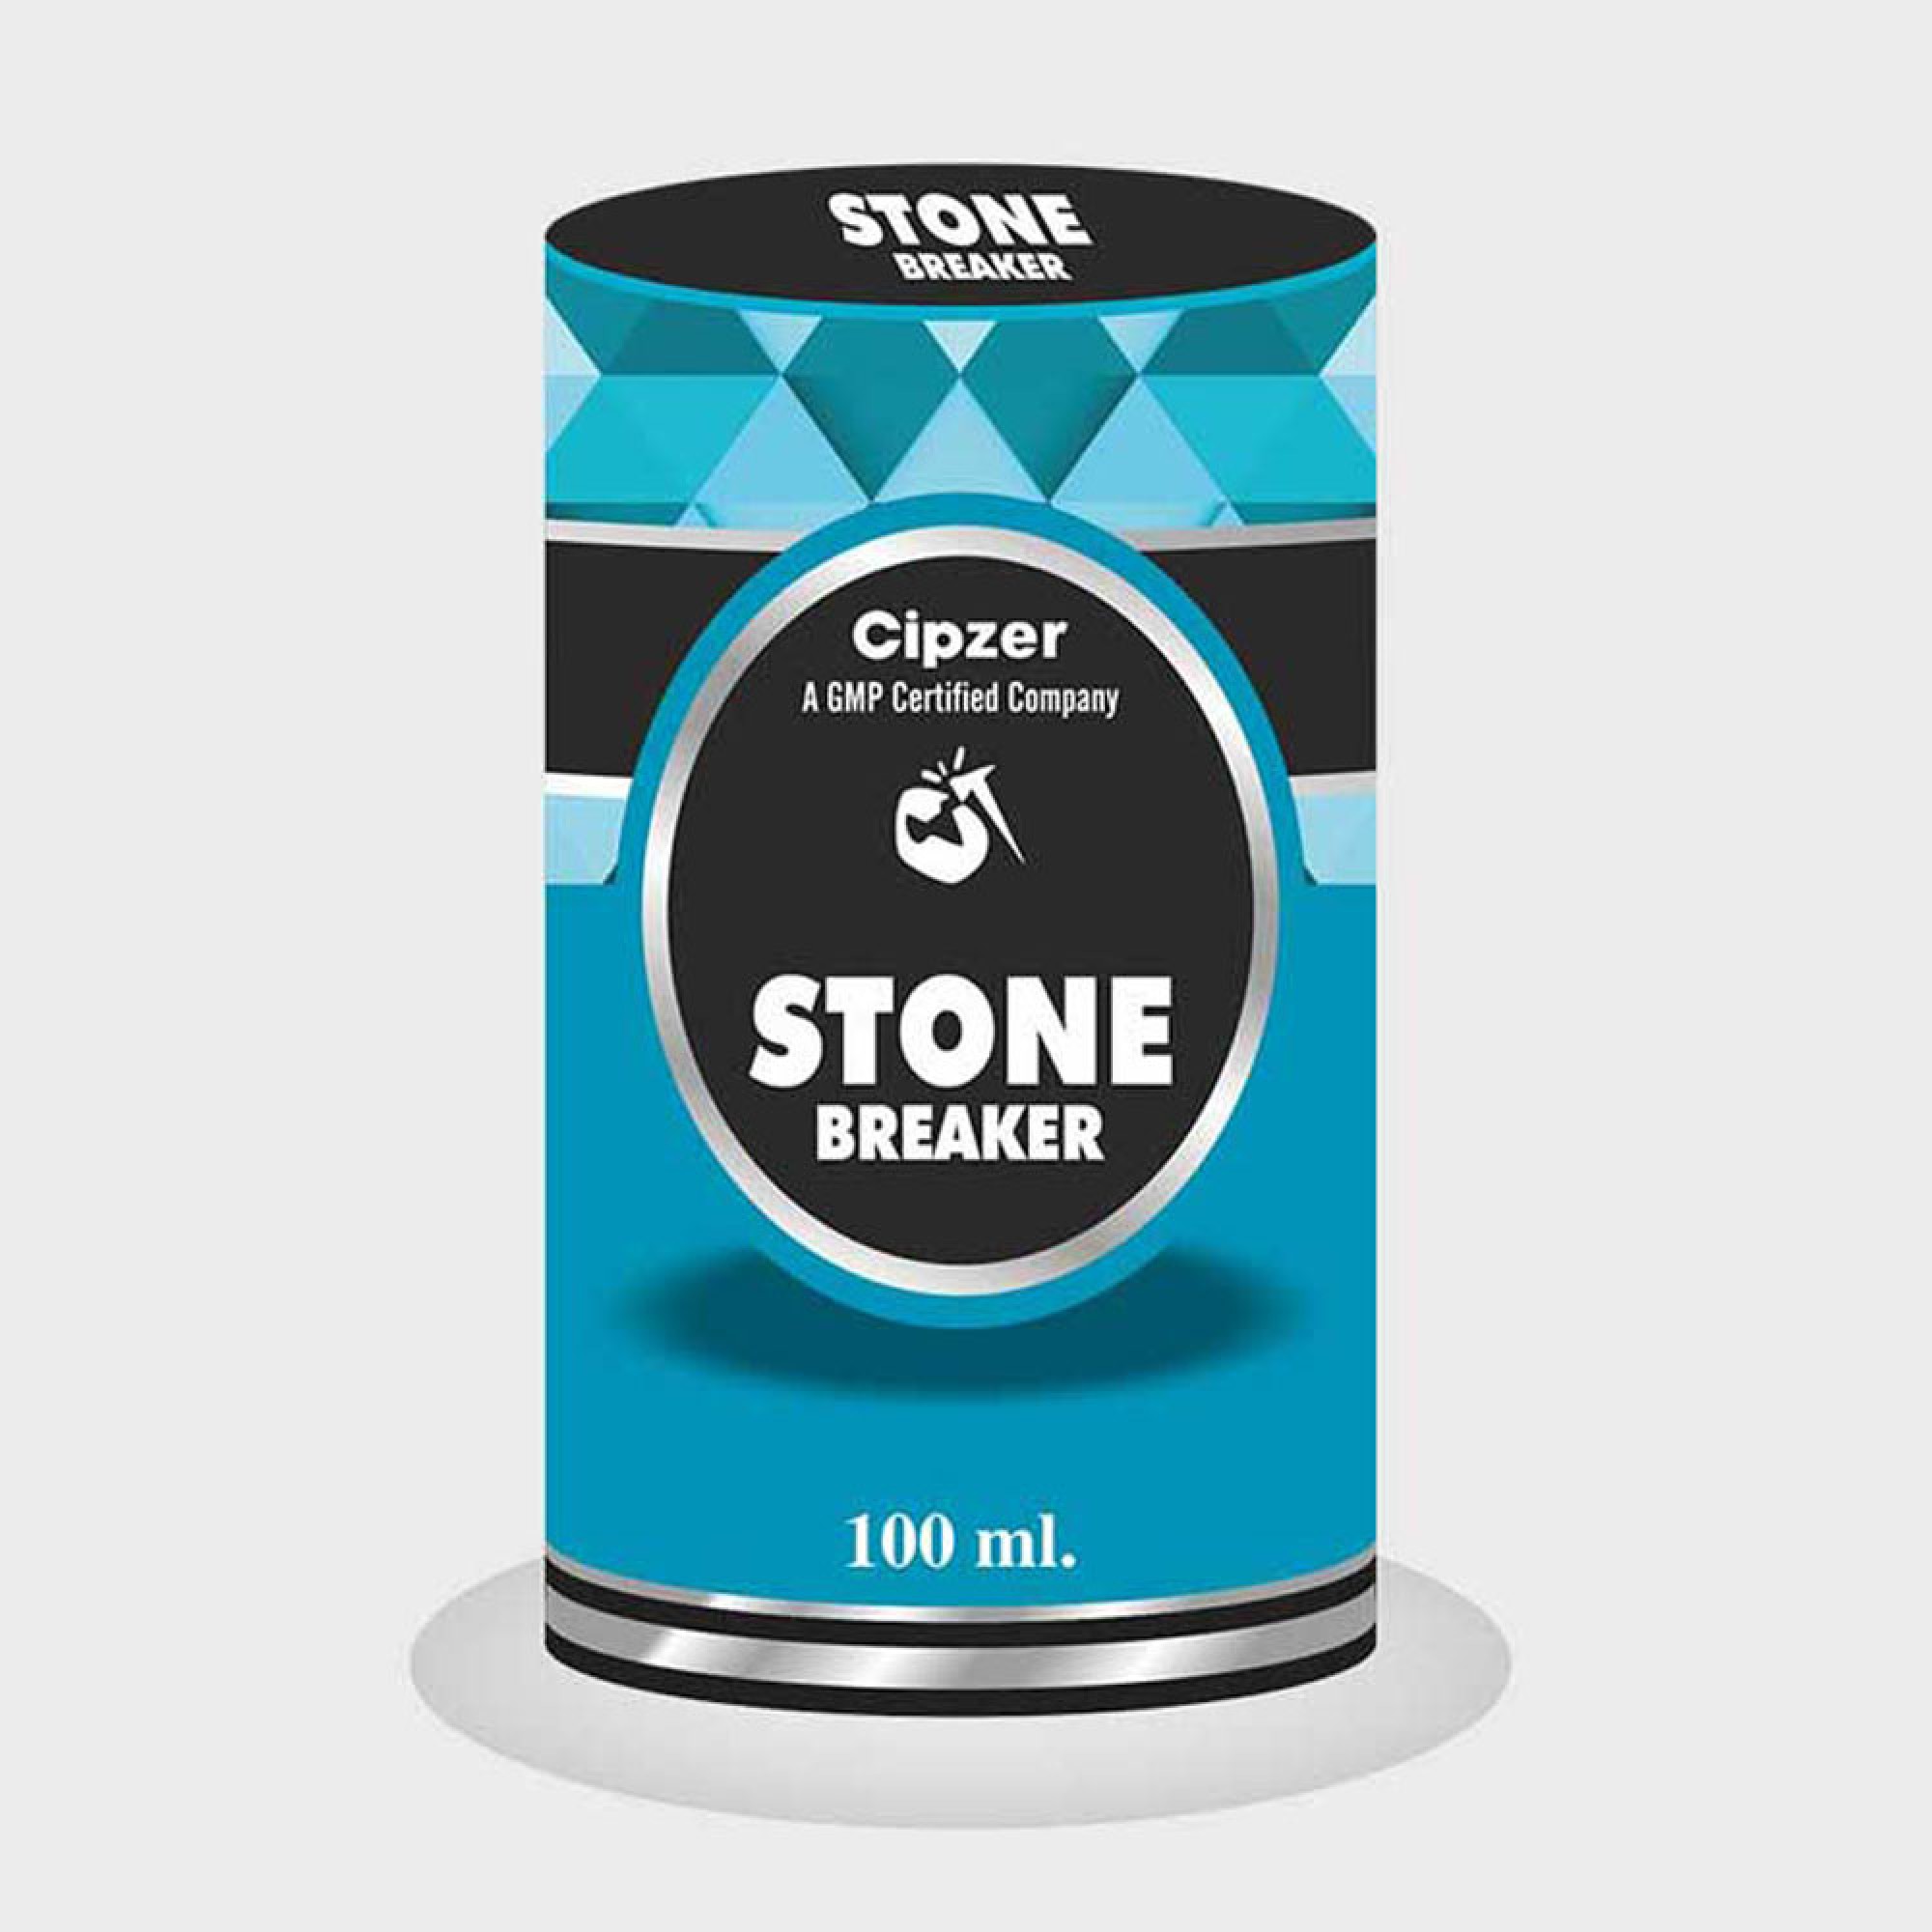 Cipzer Stone Breaker Syrup